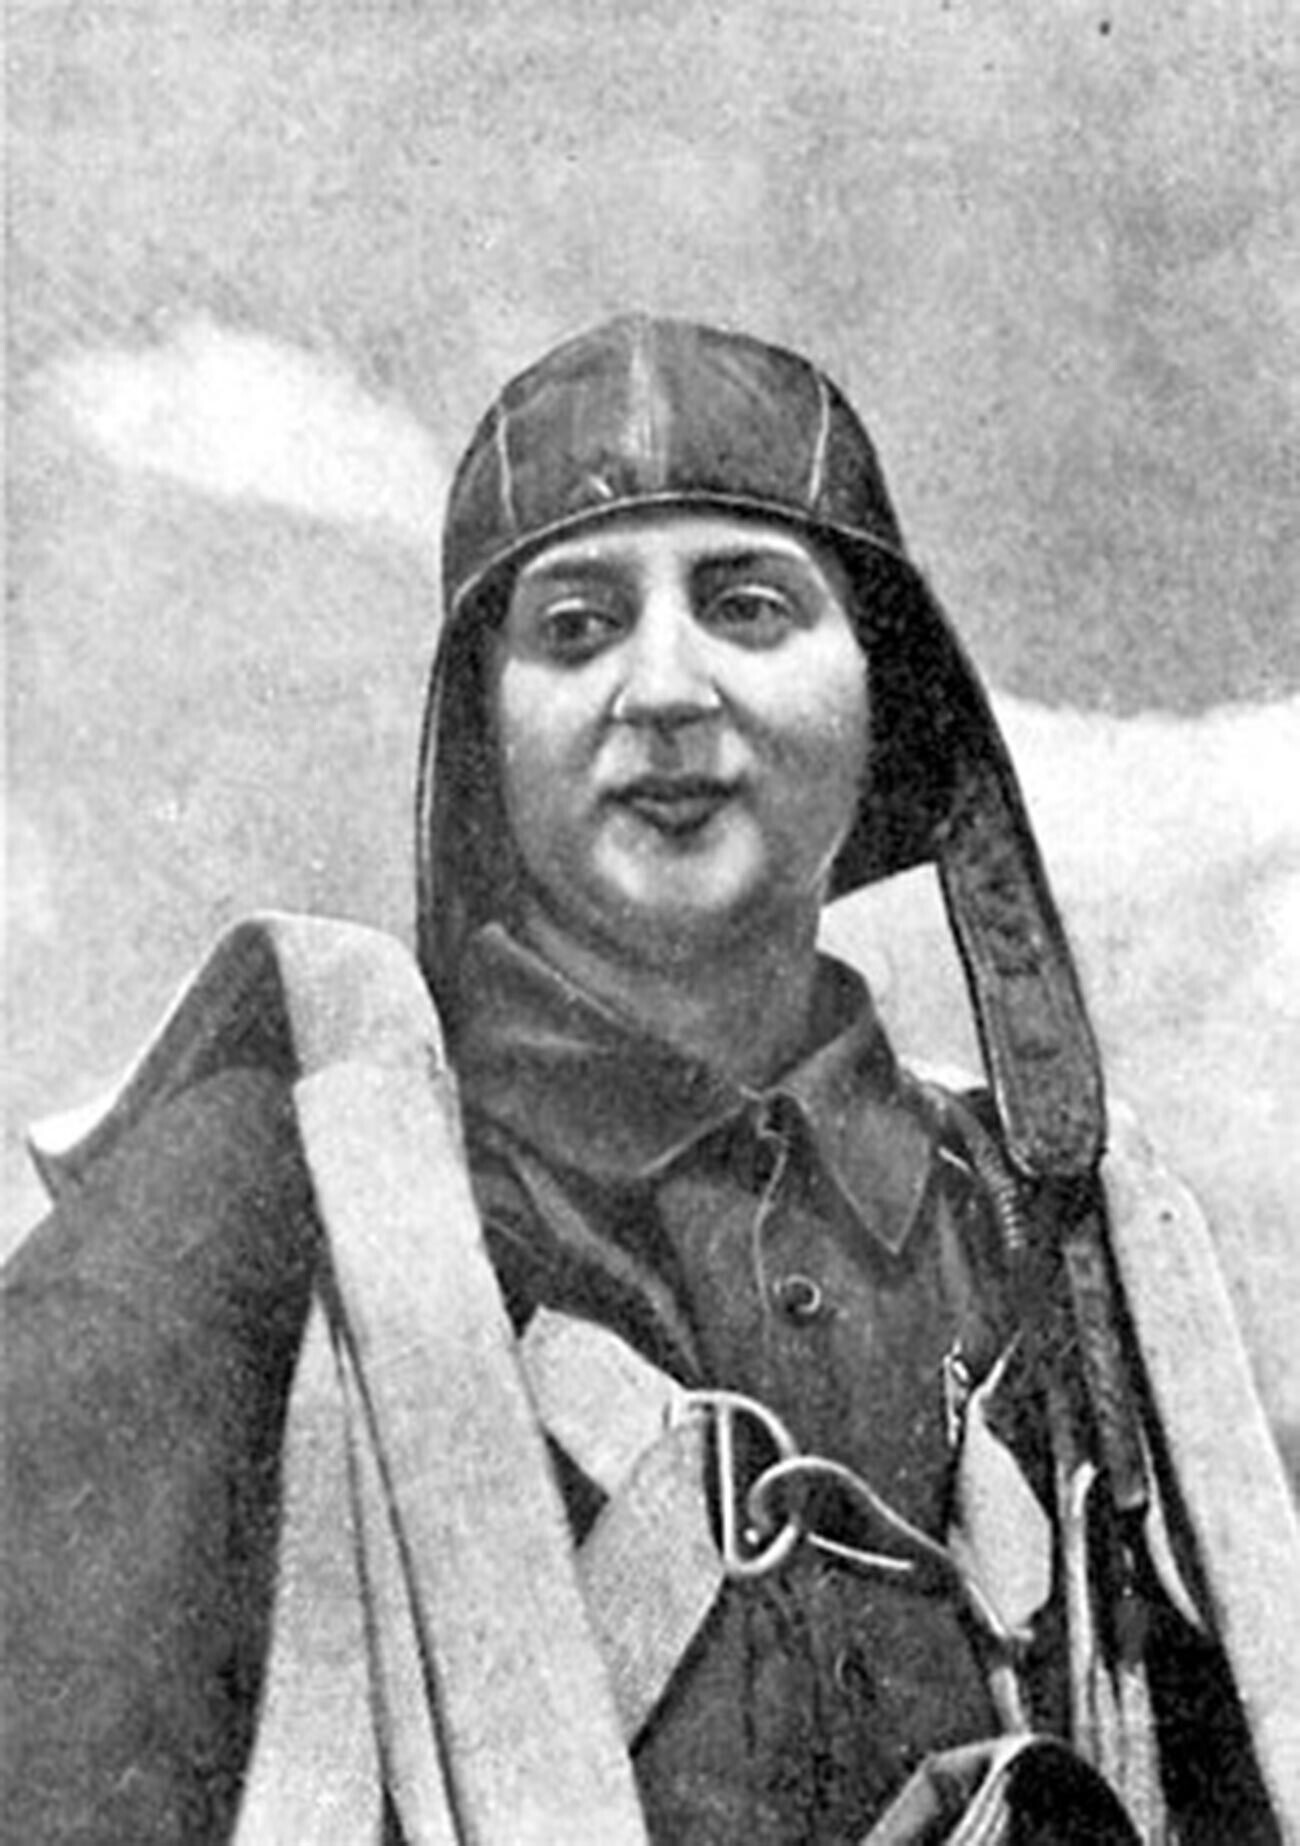 Љубов Берлин (1915-1936), советската жена-падобранац.
